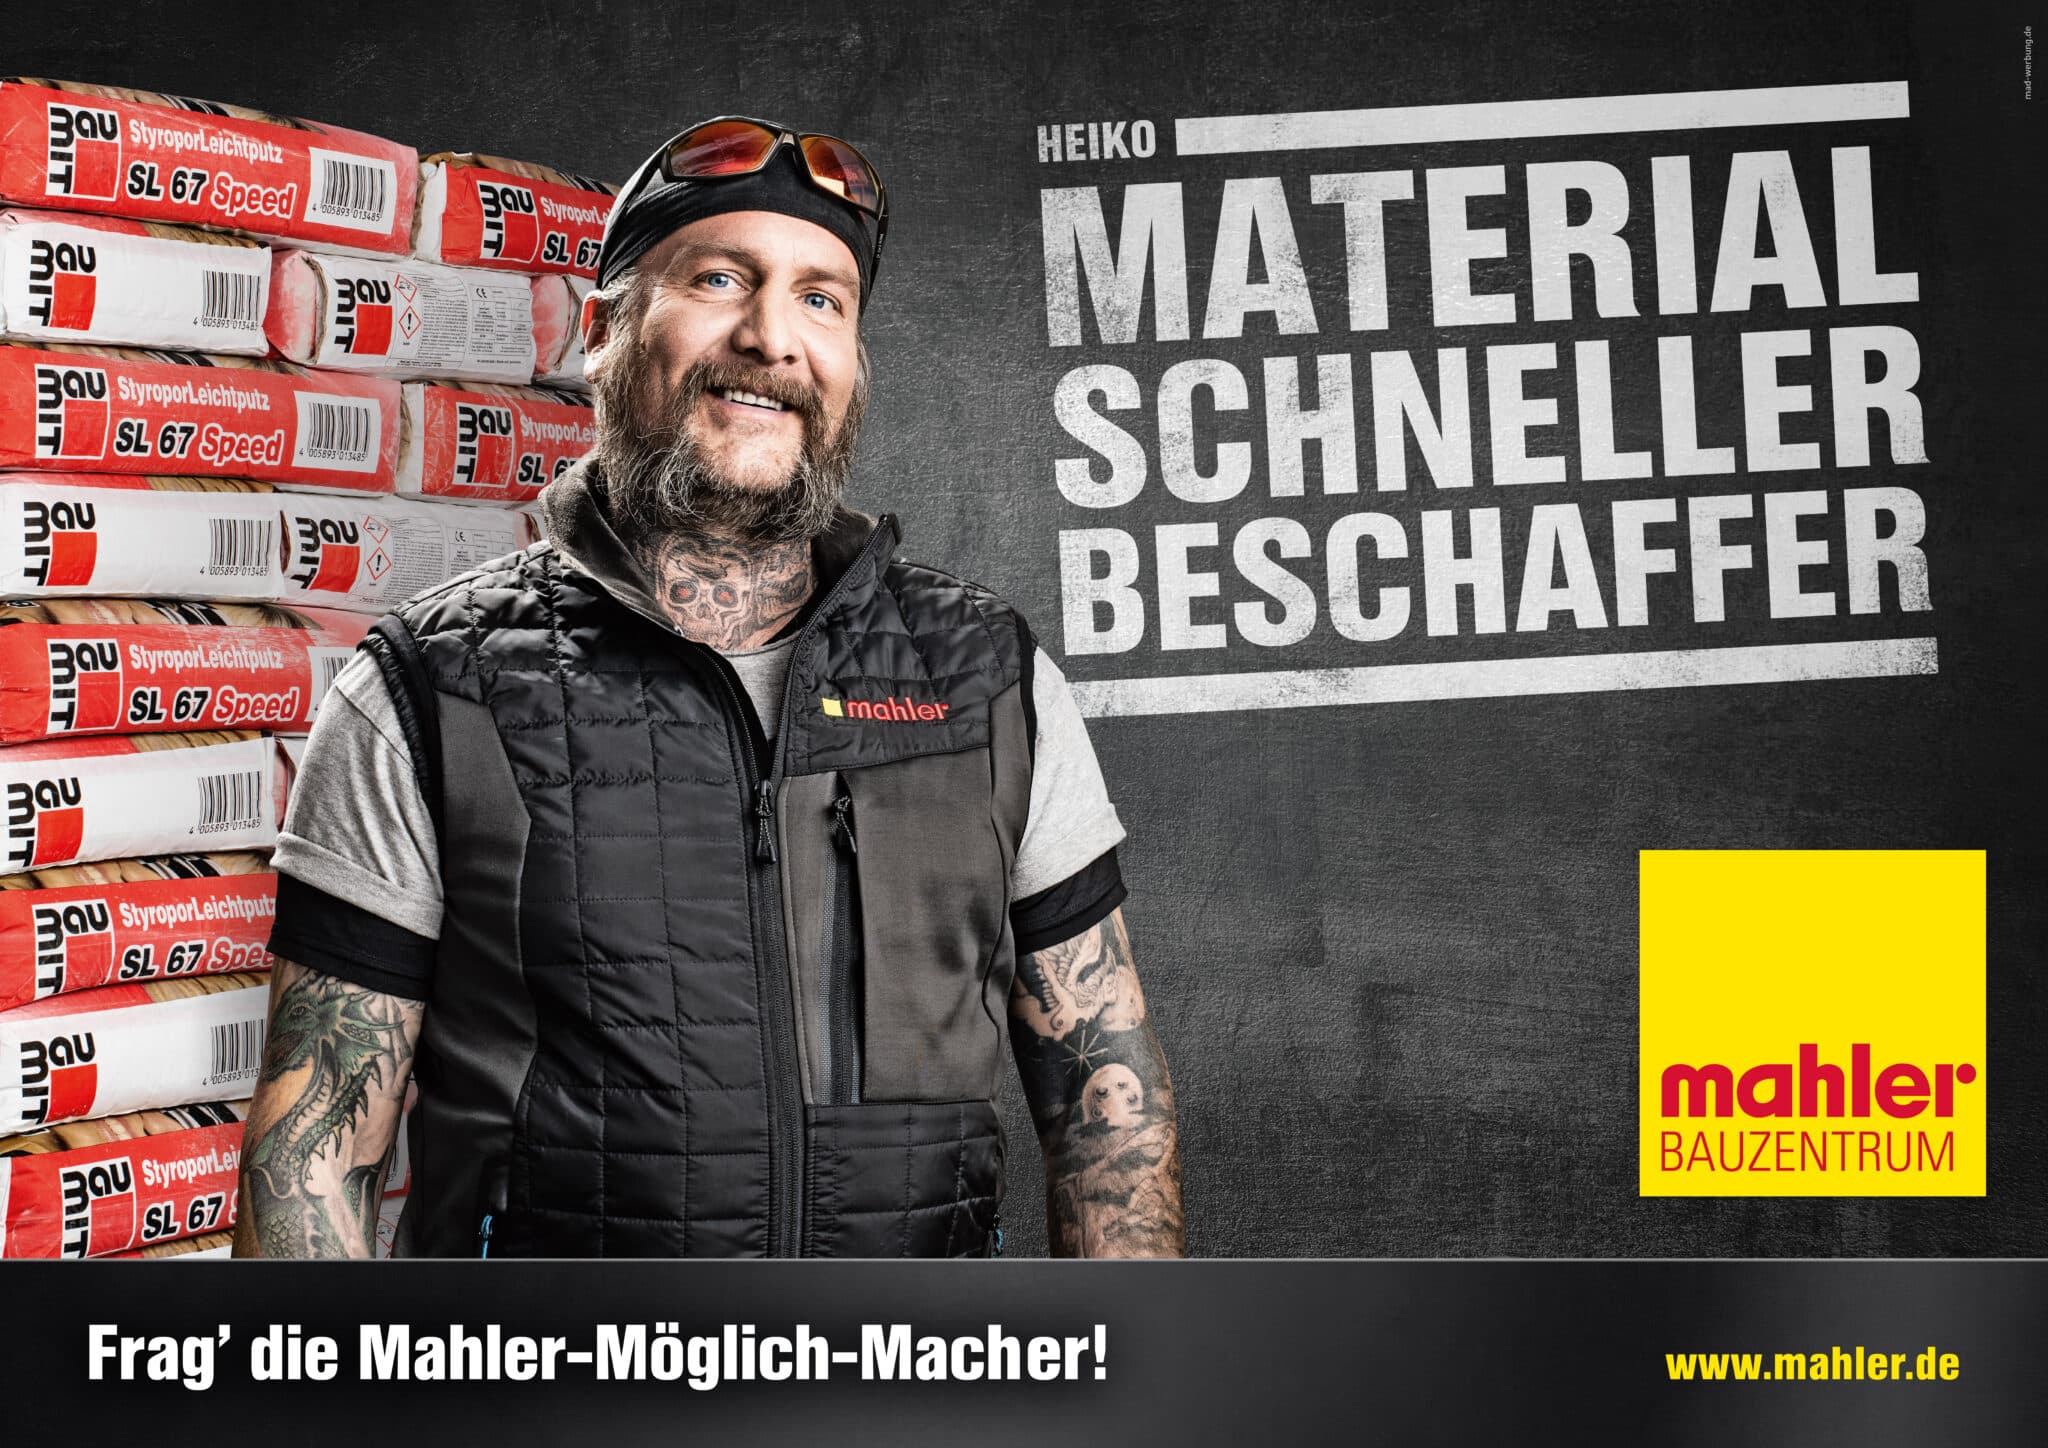 Mahler_Image-Kampagne_GF-6